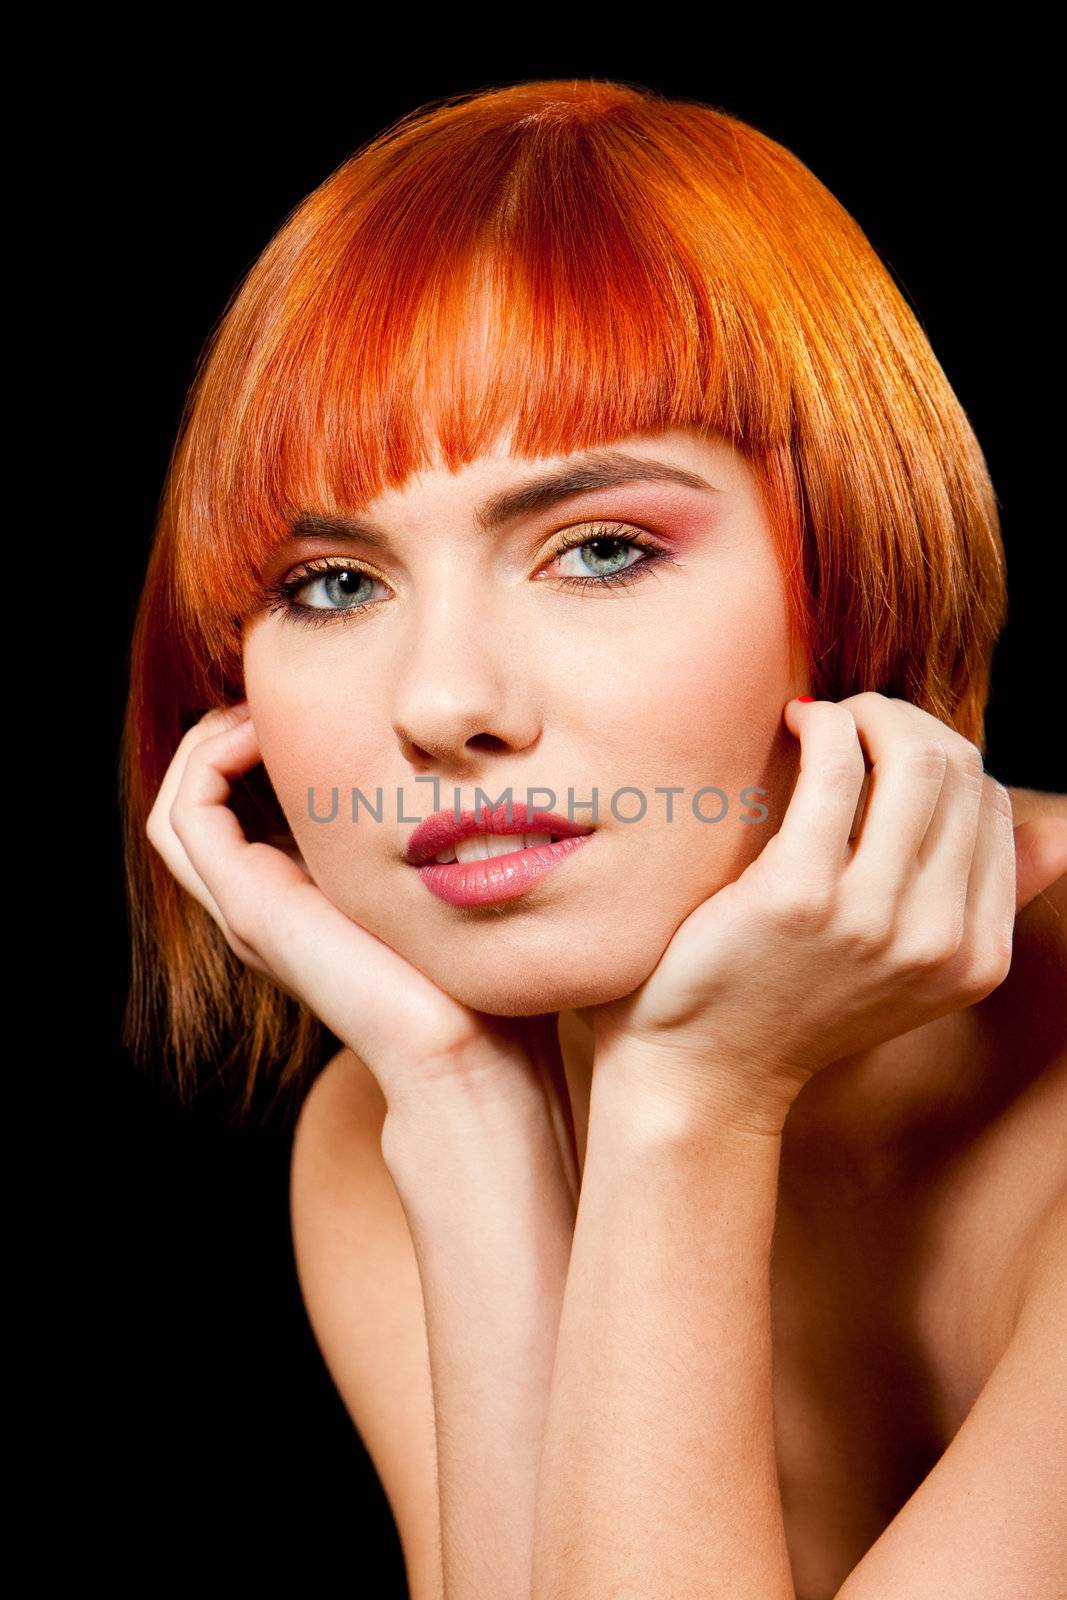 Beautiful redhead face by phakimata